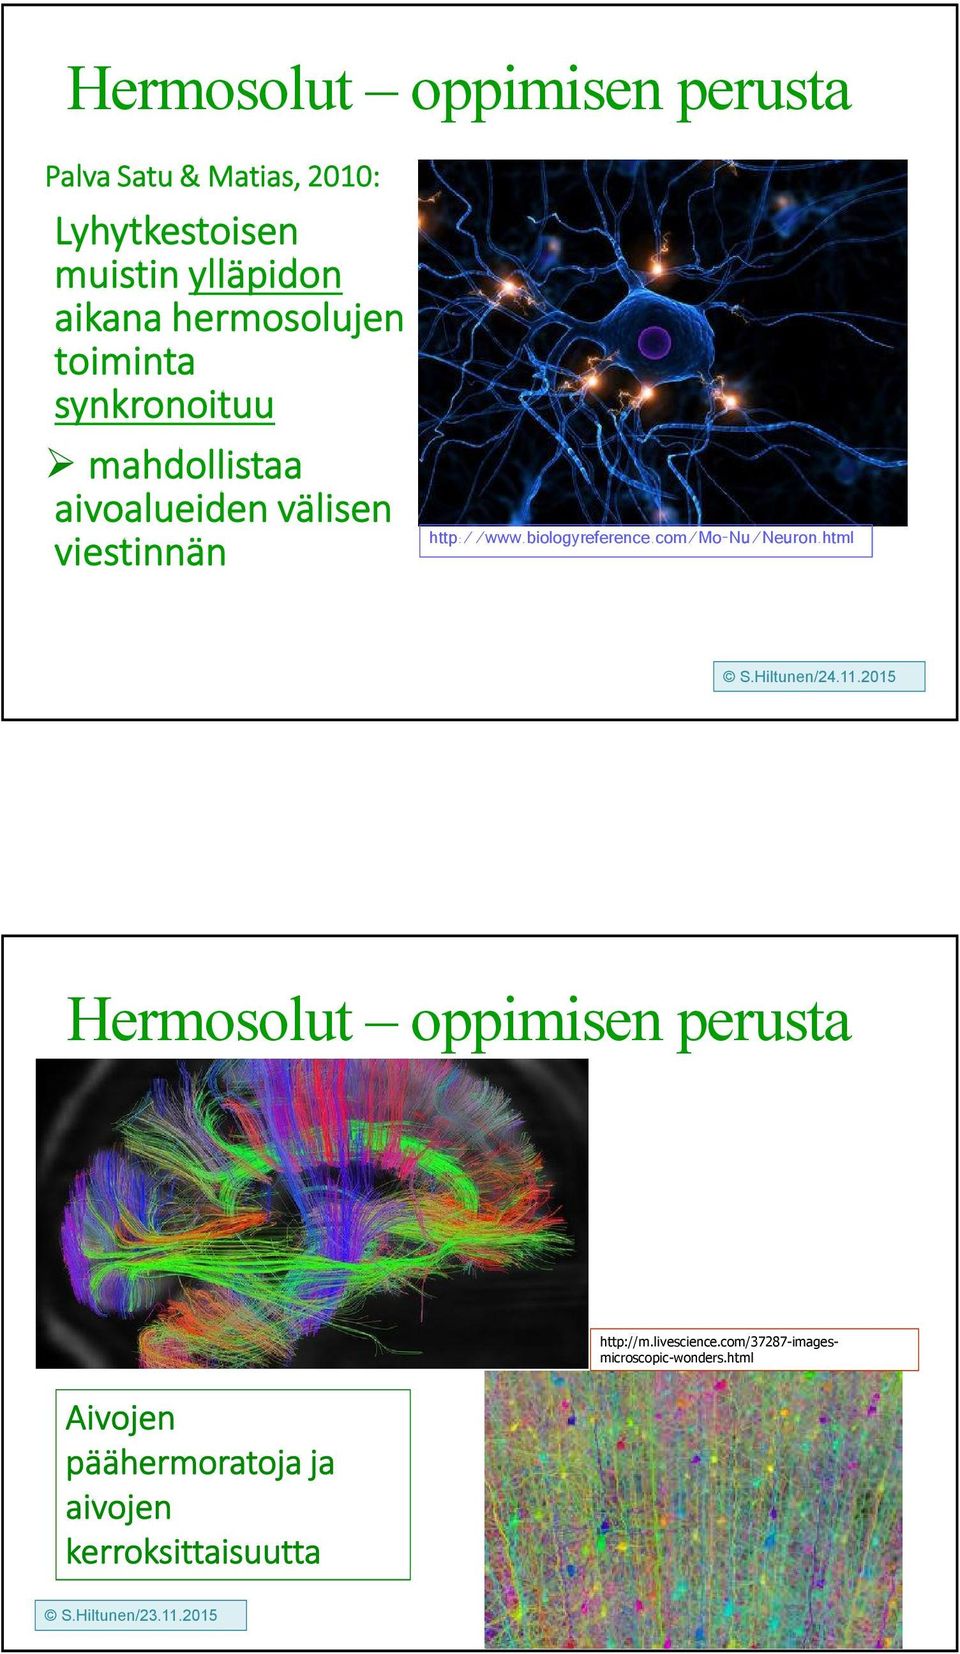 http://www.biologyreference.com/mo-nu/neuron.